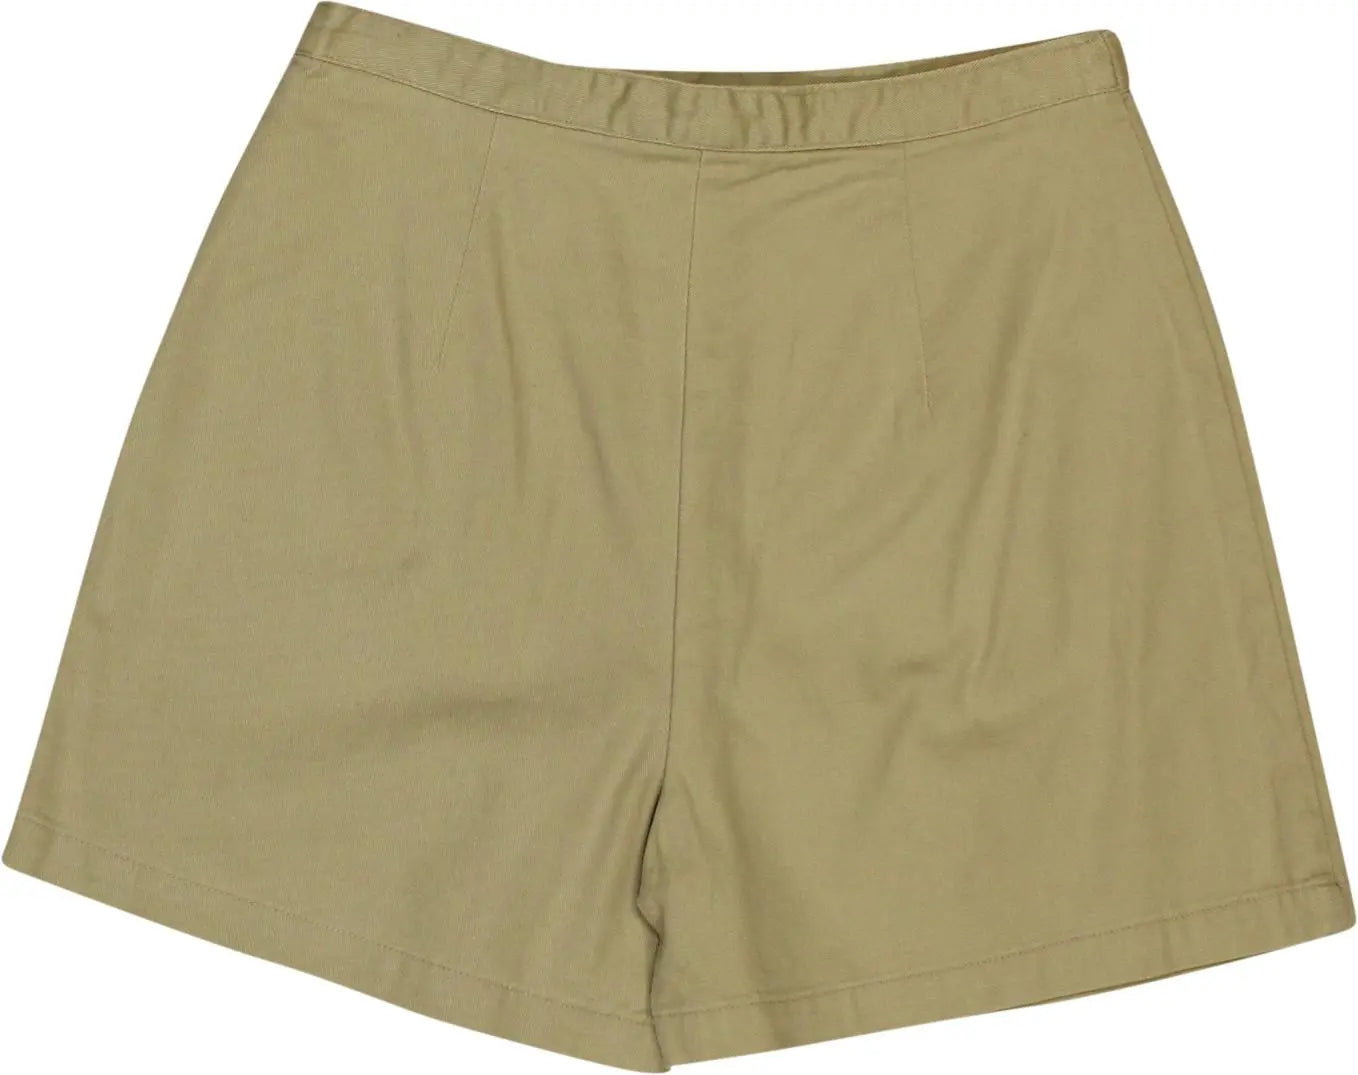 Ralph Lauren - Skirt/short- ThriftTale.com - Vintage and second handclothing